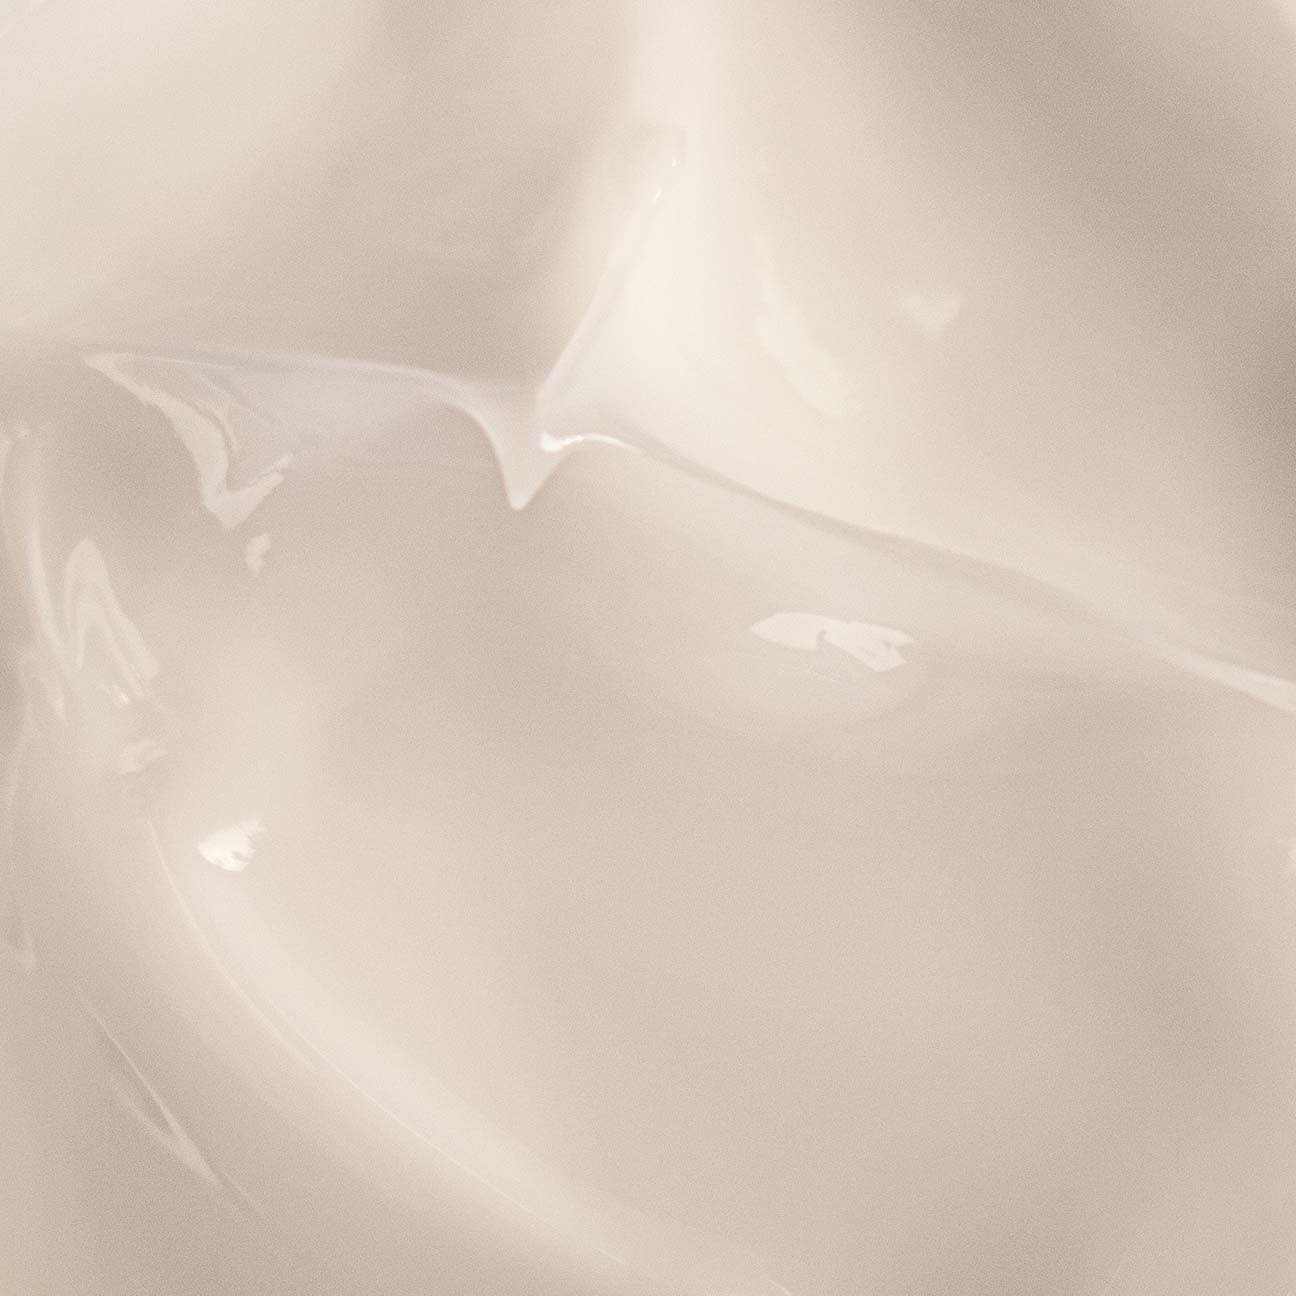 CERATEROL hydra water cream image 1